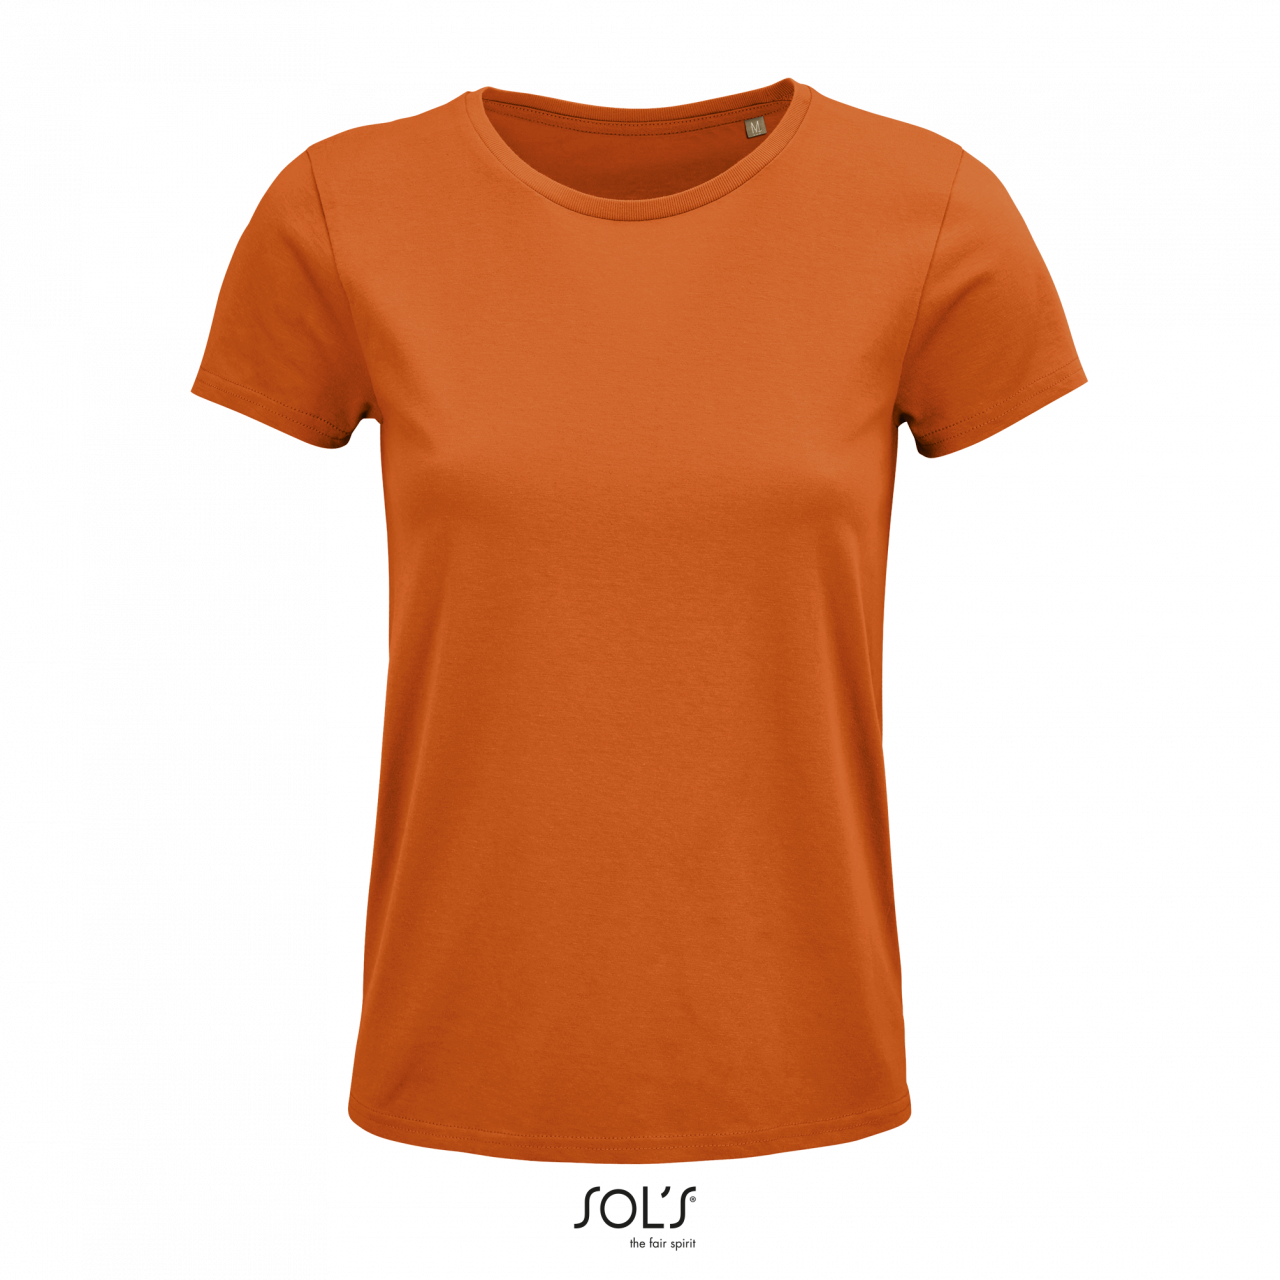 Sol's Crusader Women - Round-neck Fitted Jersey T-shirt - Sol's Crusader Women - Round-neck Fitted Jersey T-shirt - Orange